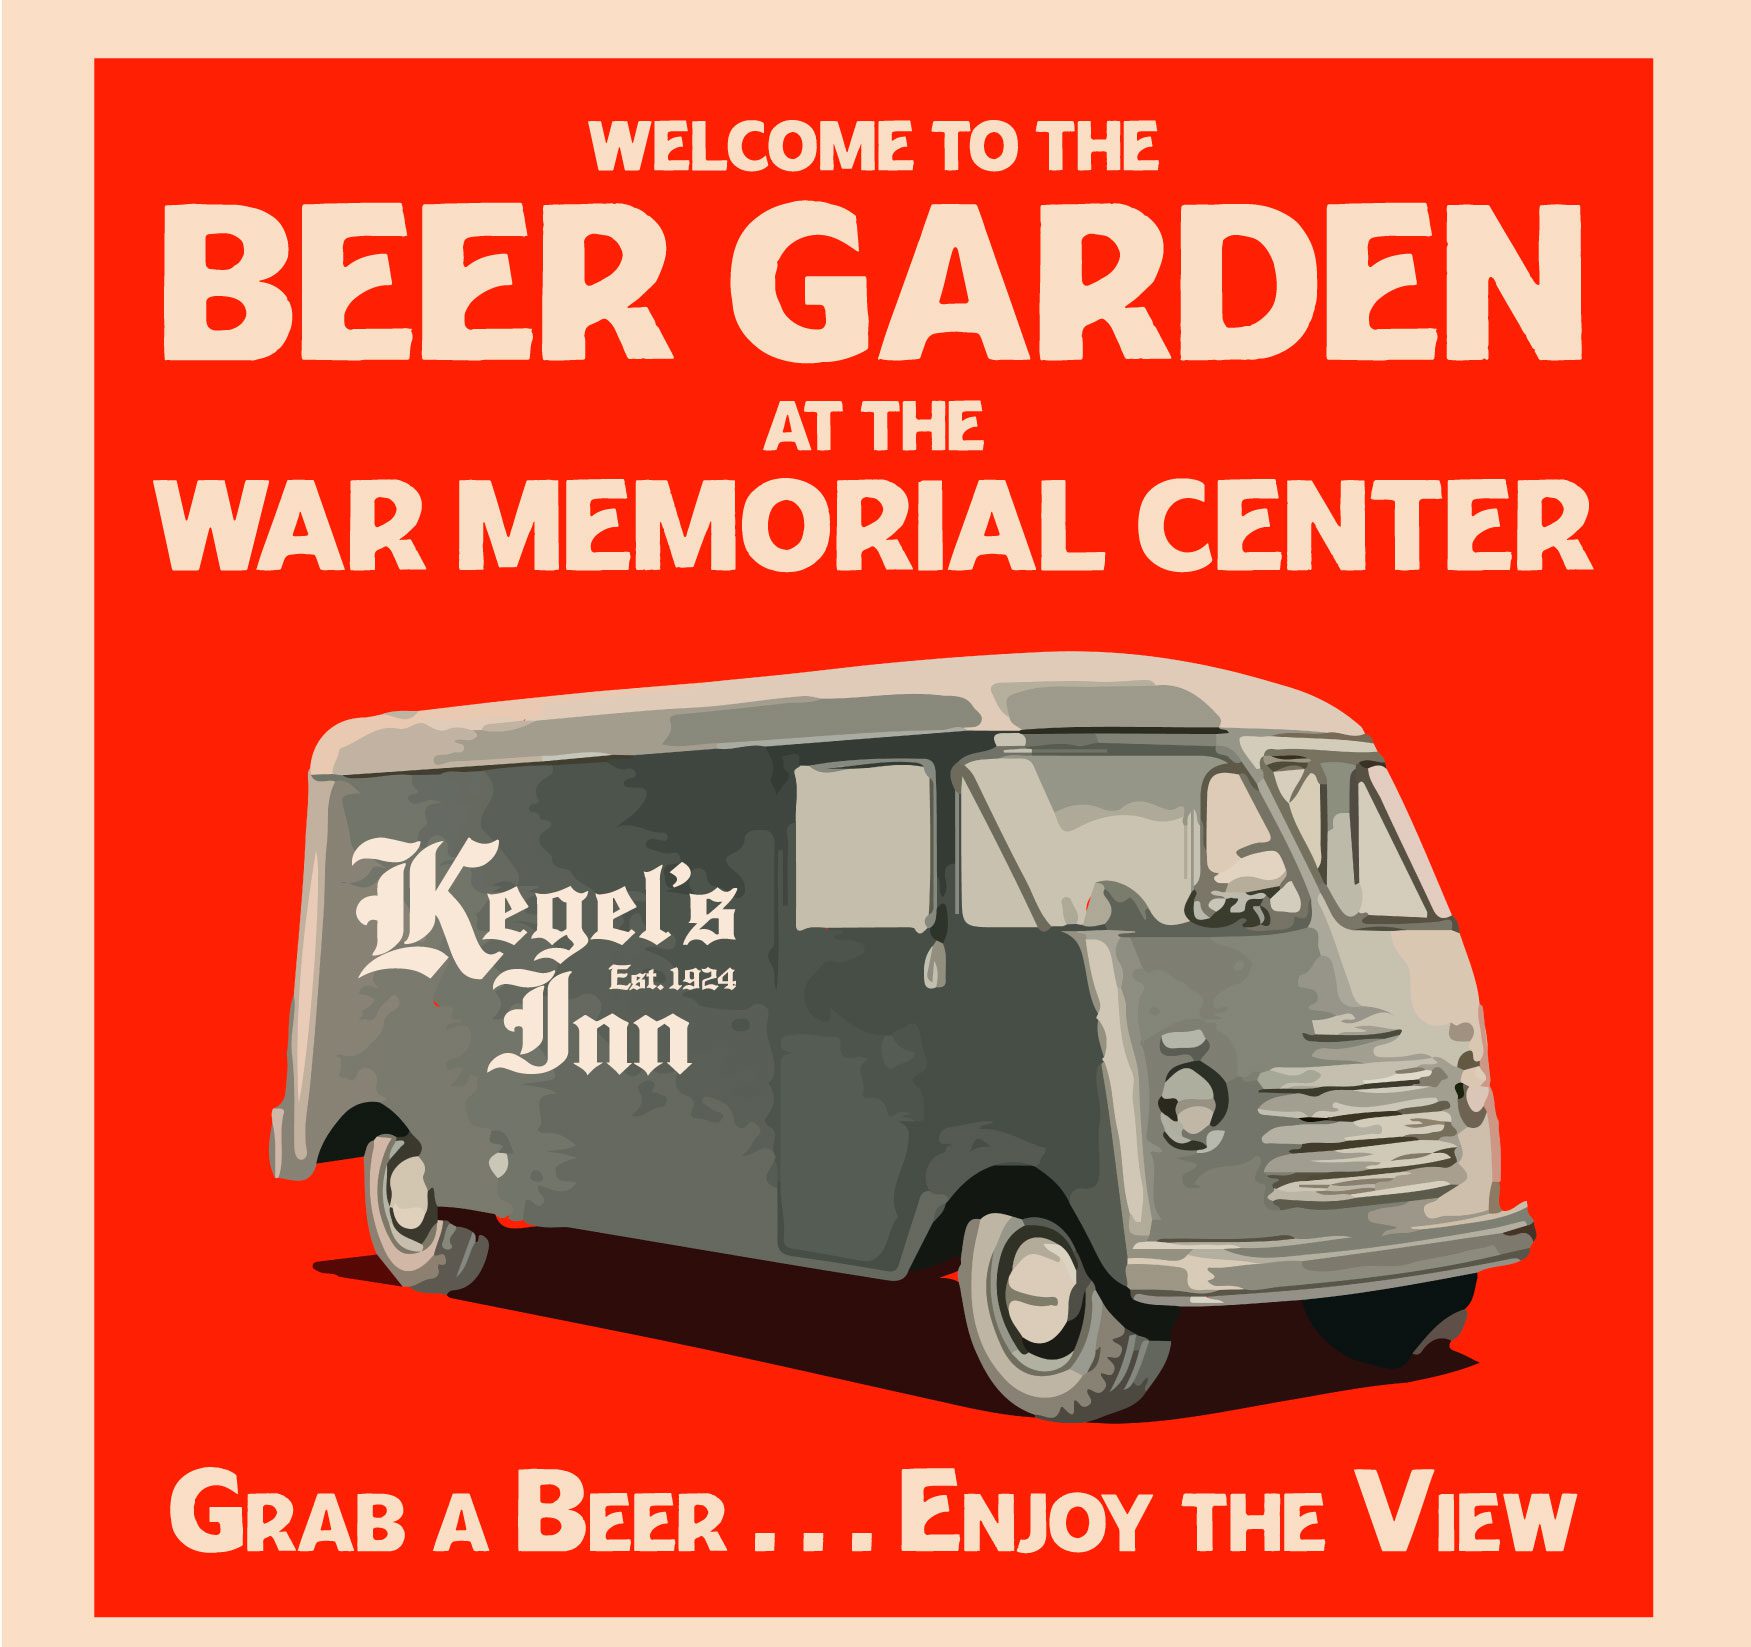 Kegel’s Inn to Open One-of-a-Kind Beer Garden Experience at War Memorial Center